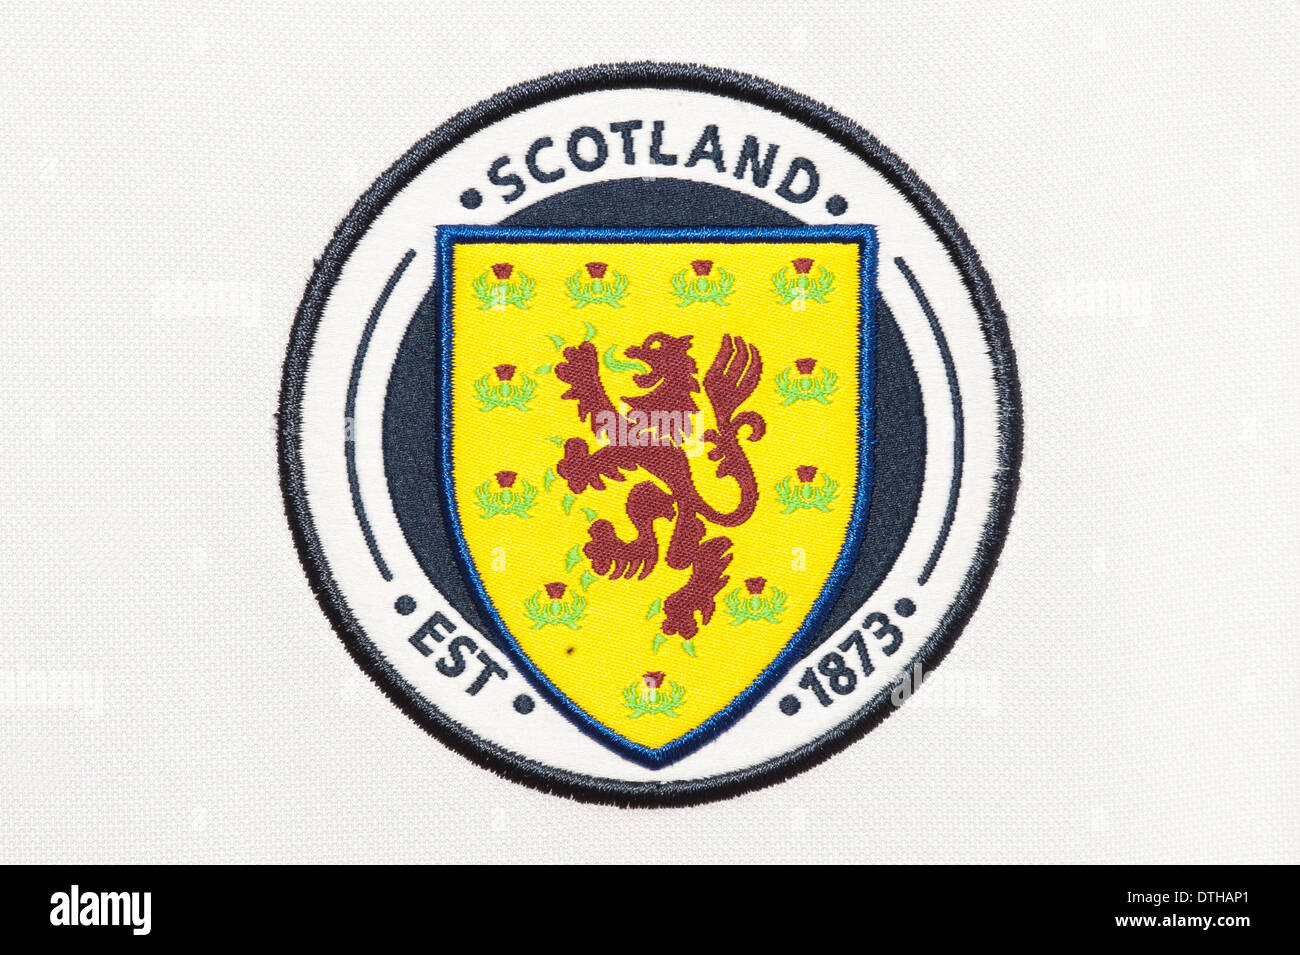 Close up Scottish National football team kit Foto Stock